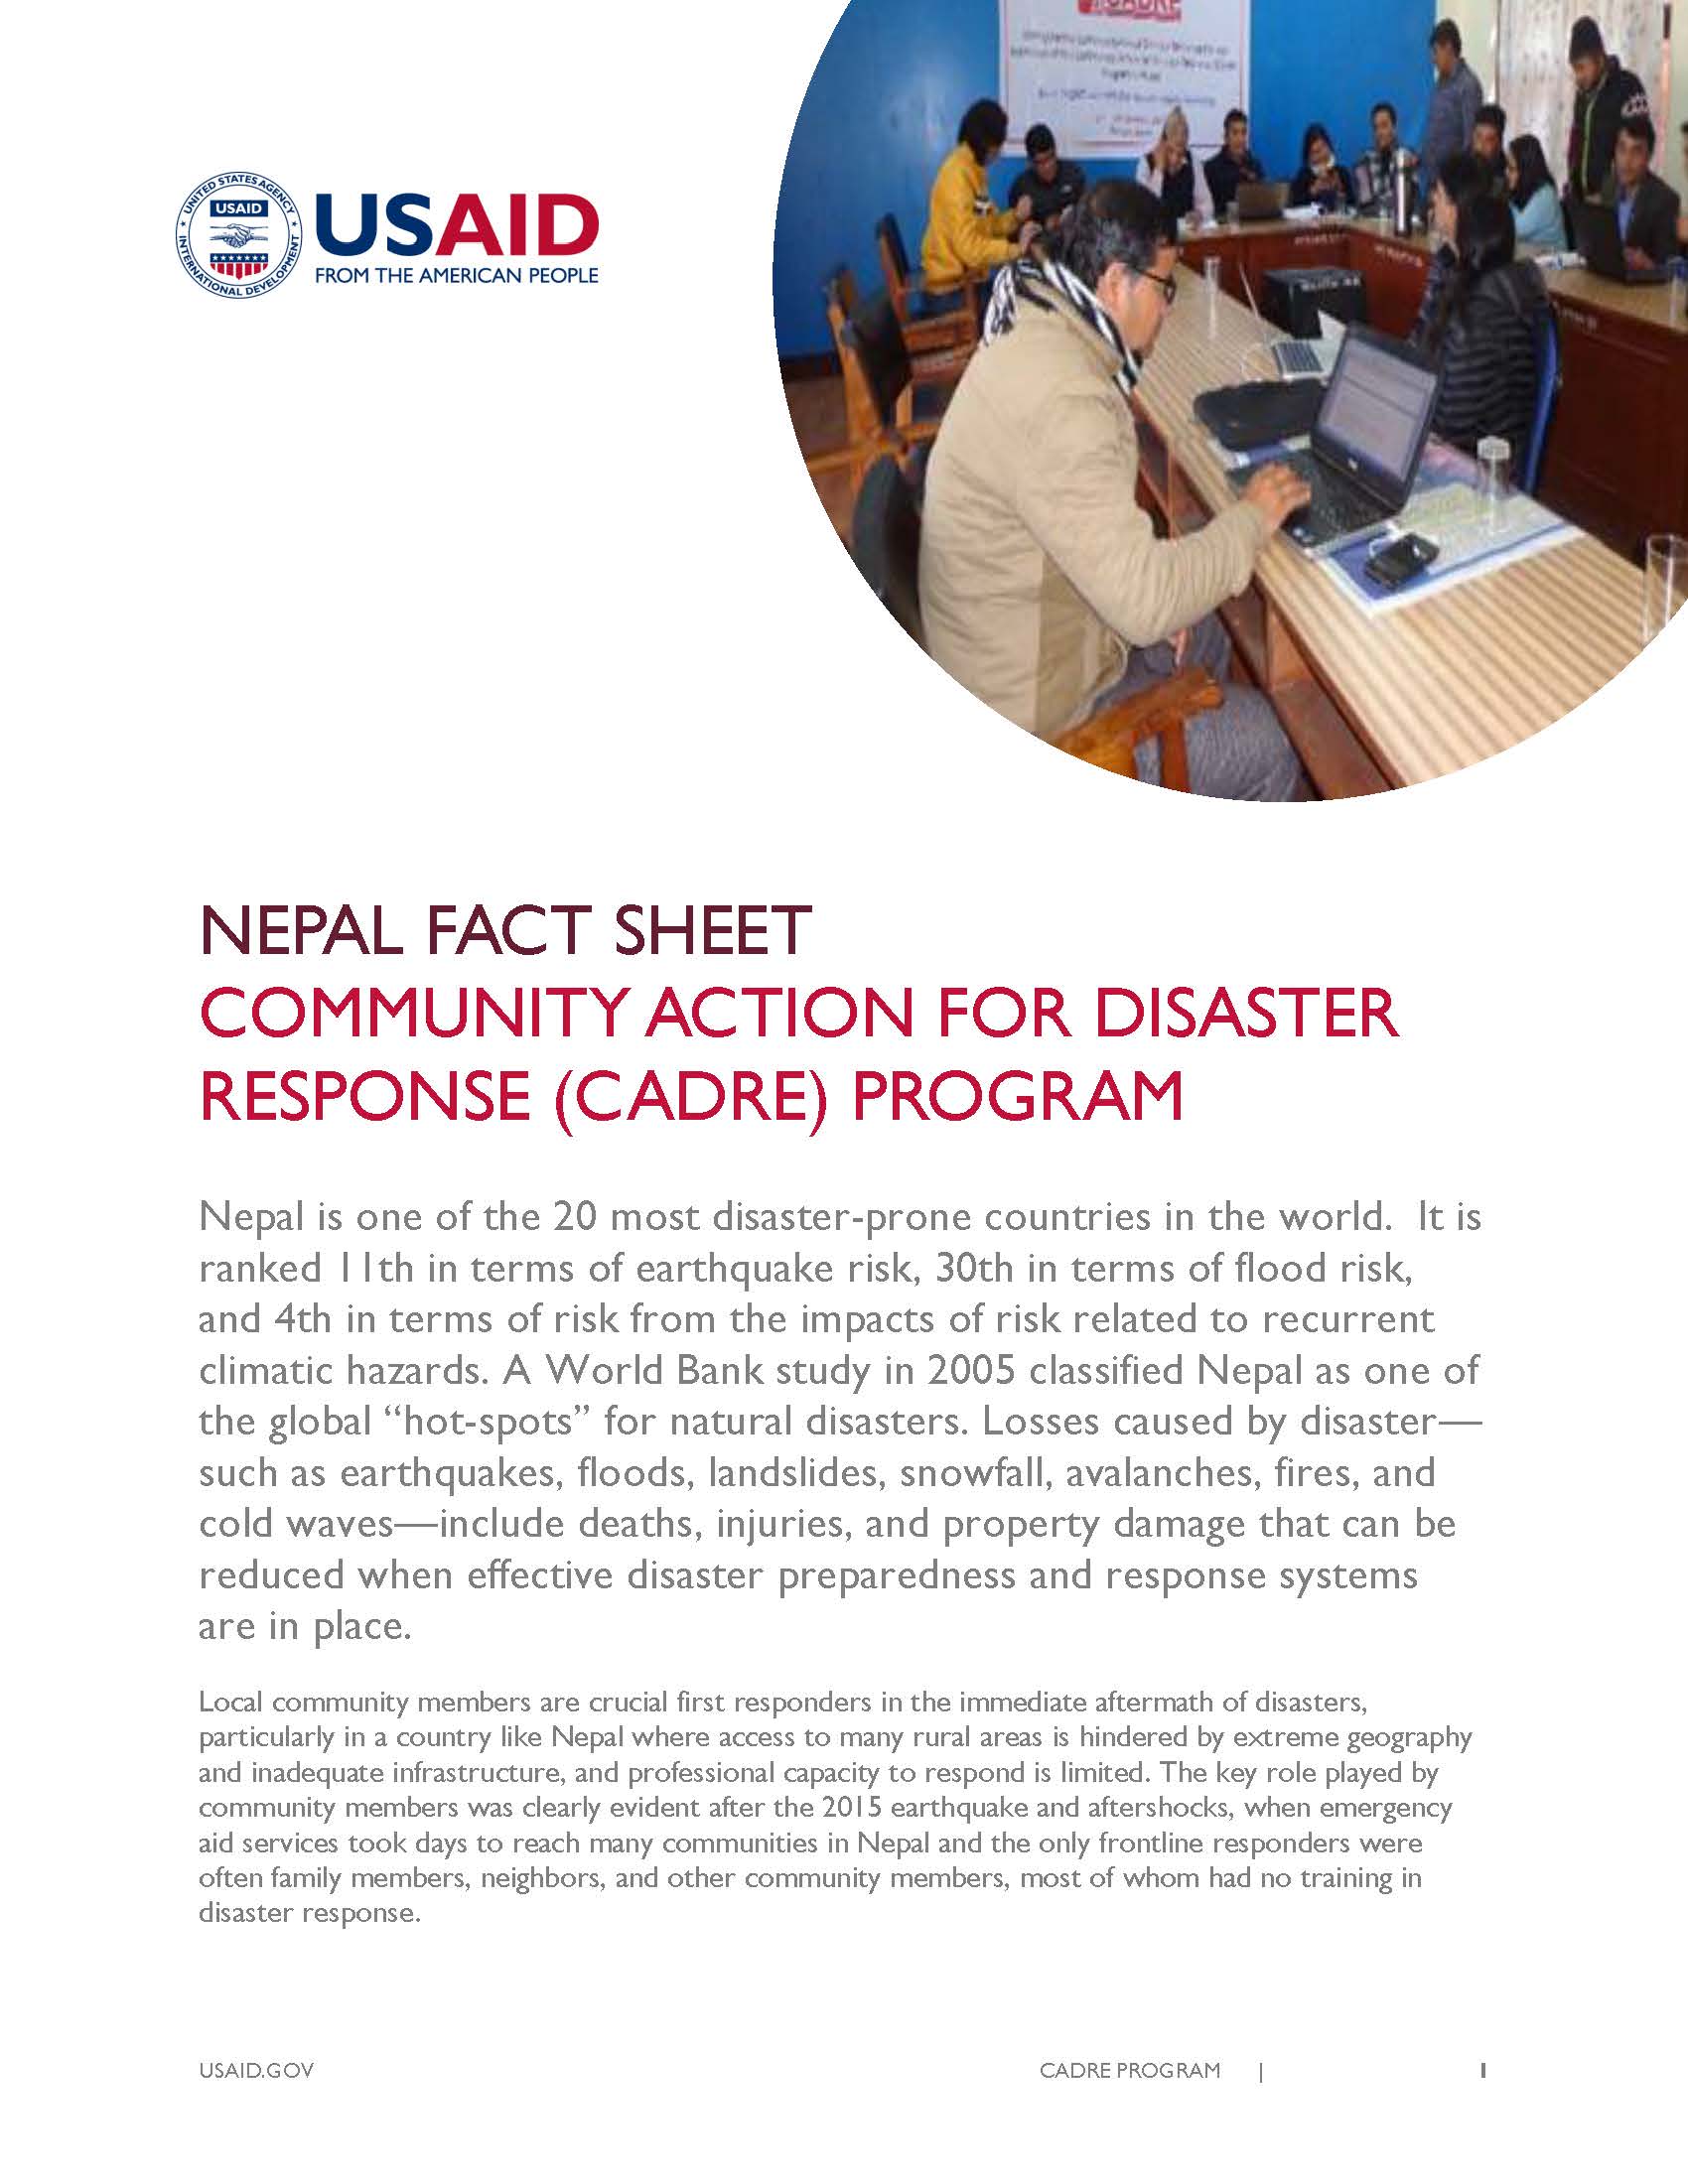 Fact Sheet: COMMUNITY ACTION FOR DISASTER RESPONSE (CADRE) PROGRAM